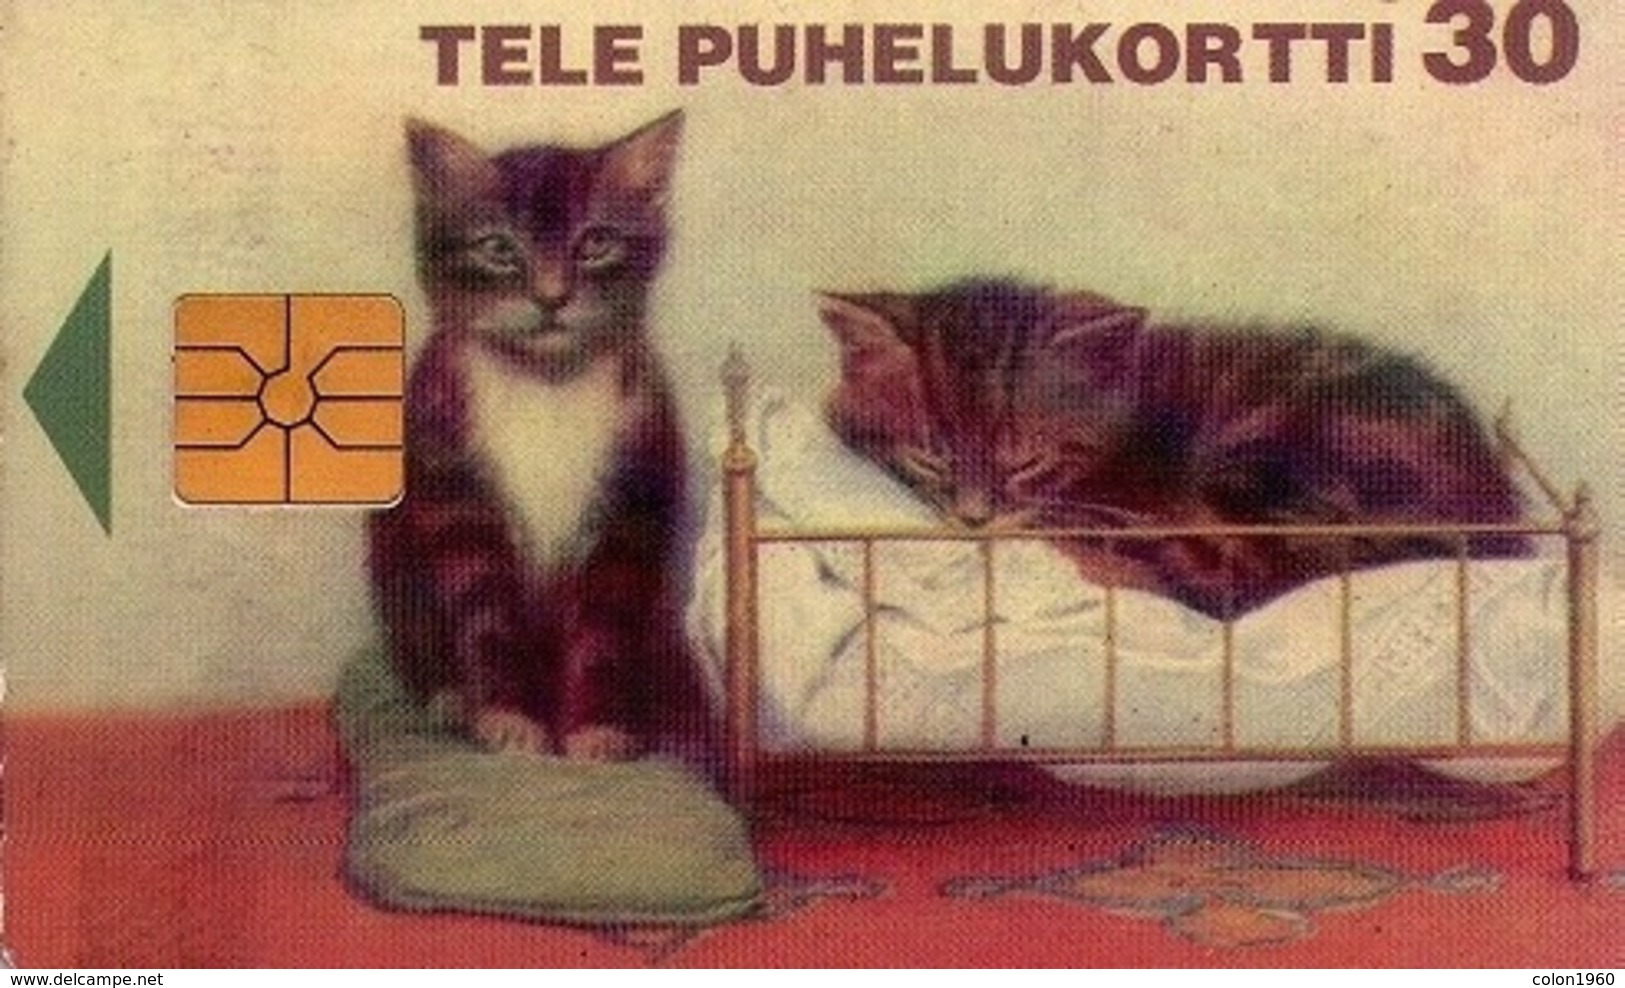 FINLANDIA. FI-SON-D-0119. GATOS - CATS. St. Valentine's Day 1997.  01/1997. (683). - Cats